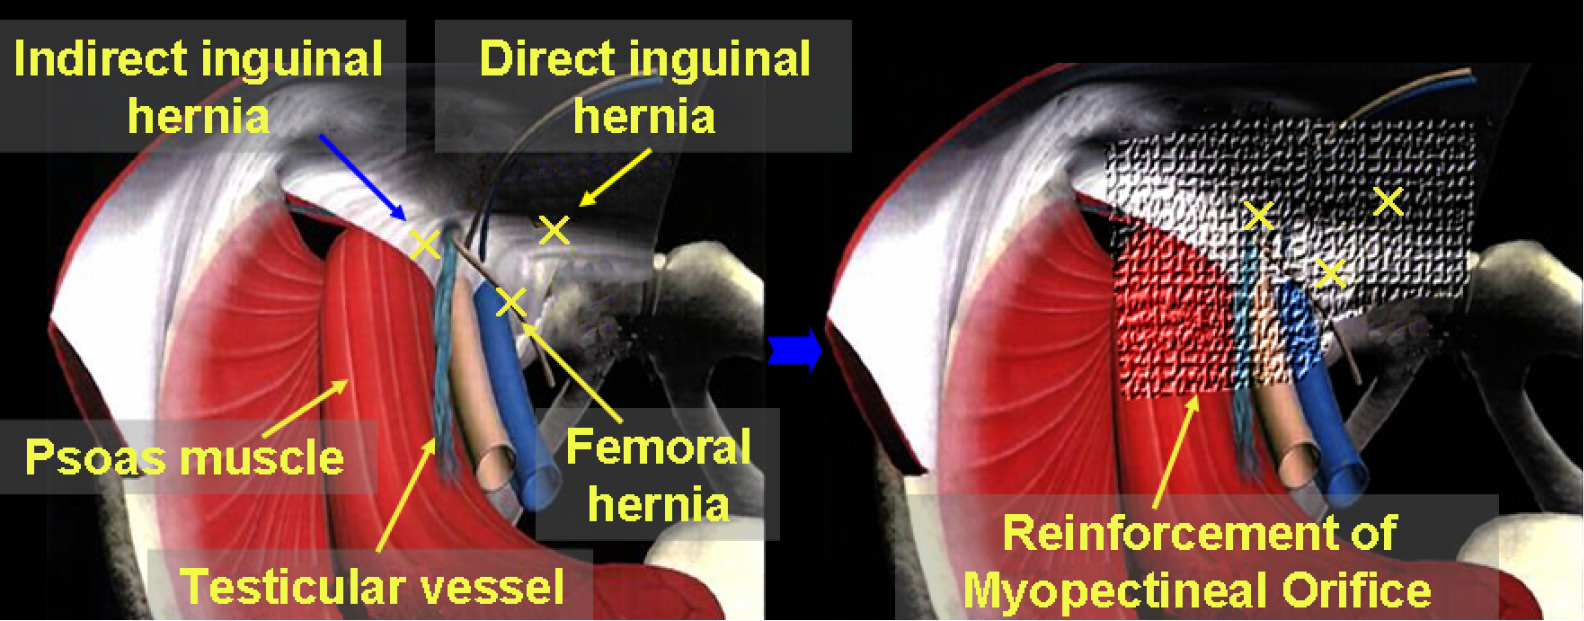 Laparoscopic Inguinal Hernia Anatomy